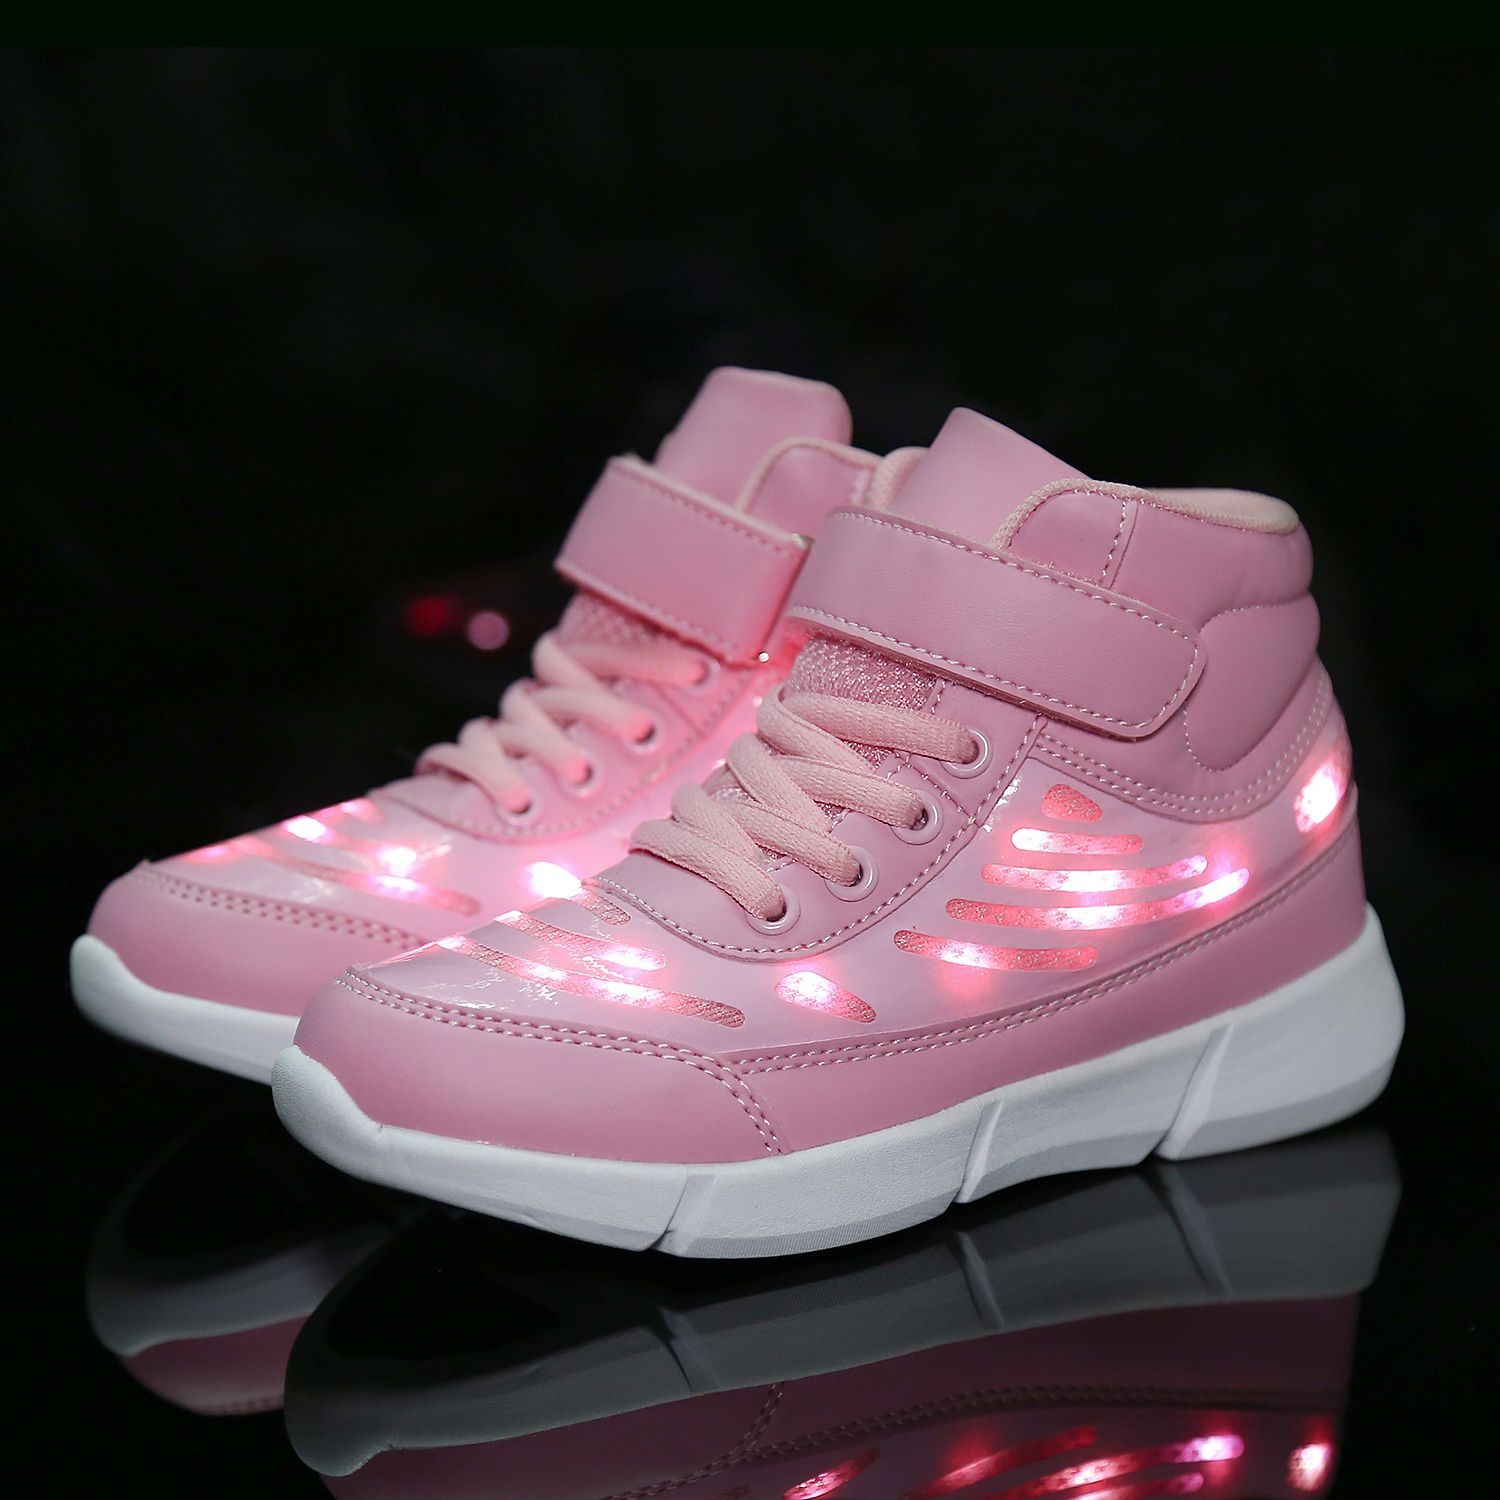 led light shoes for boy